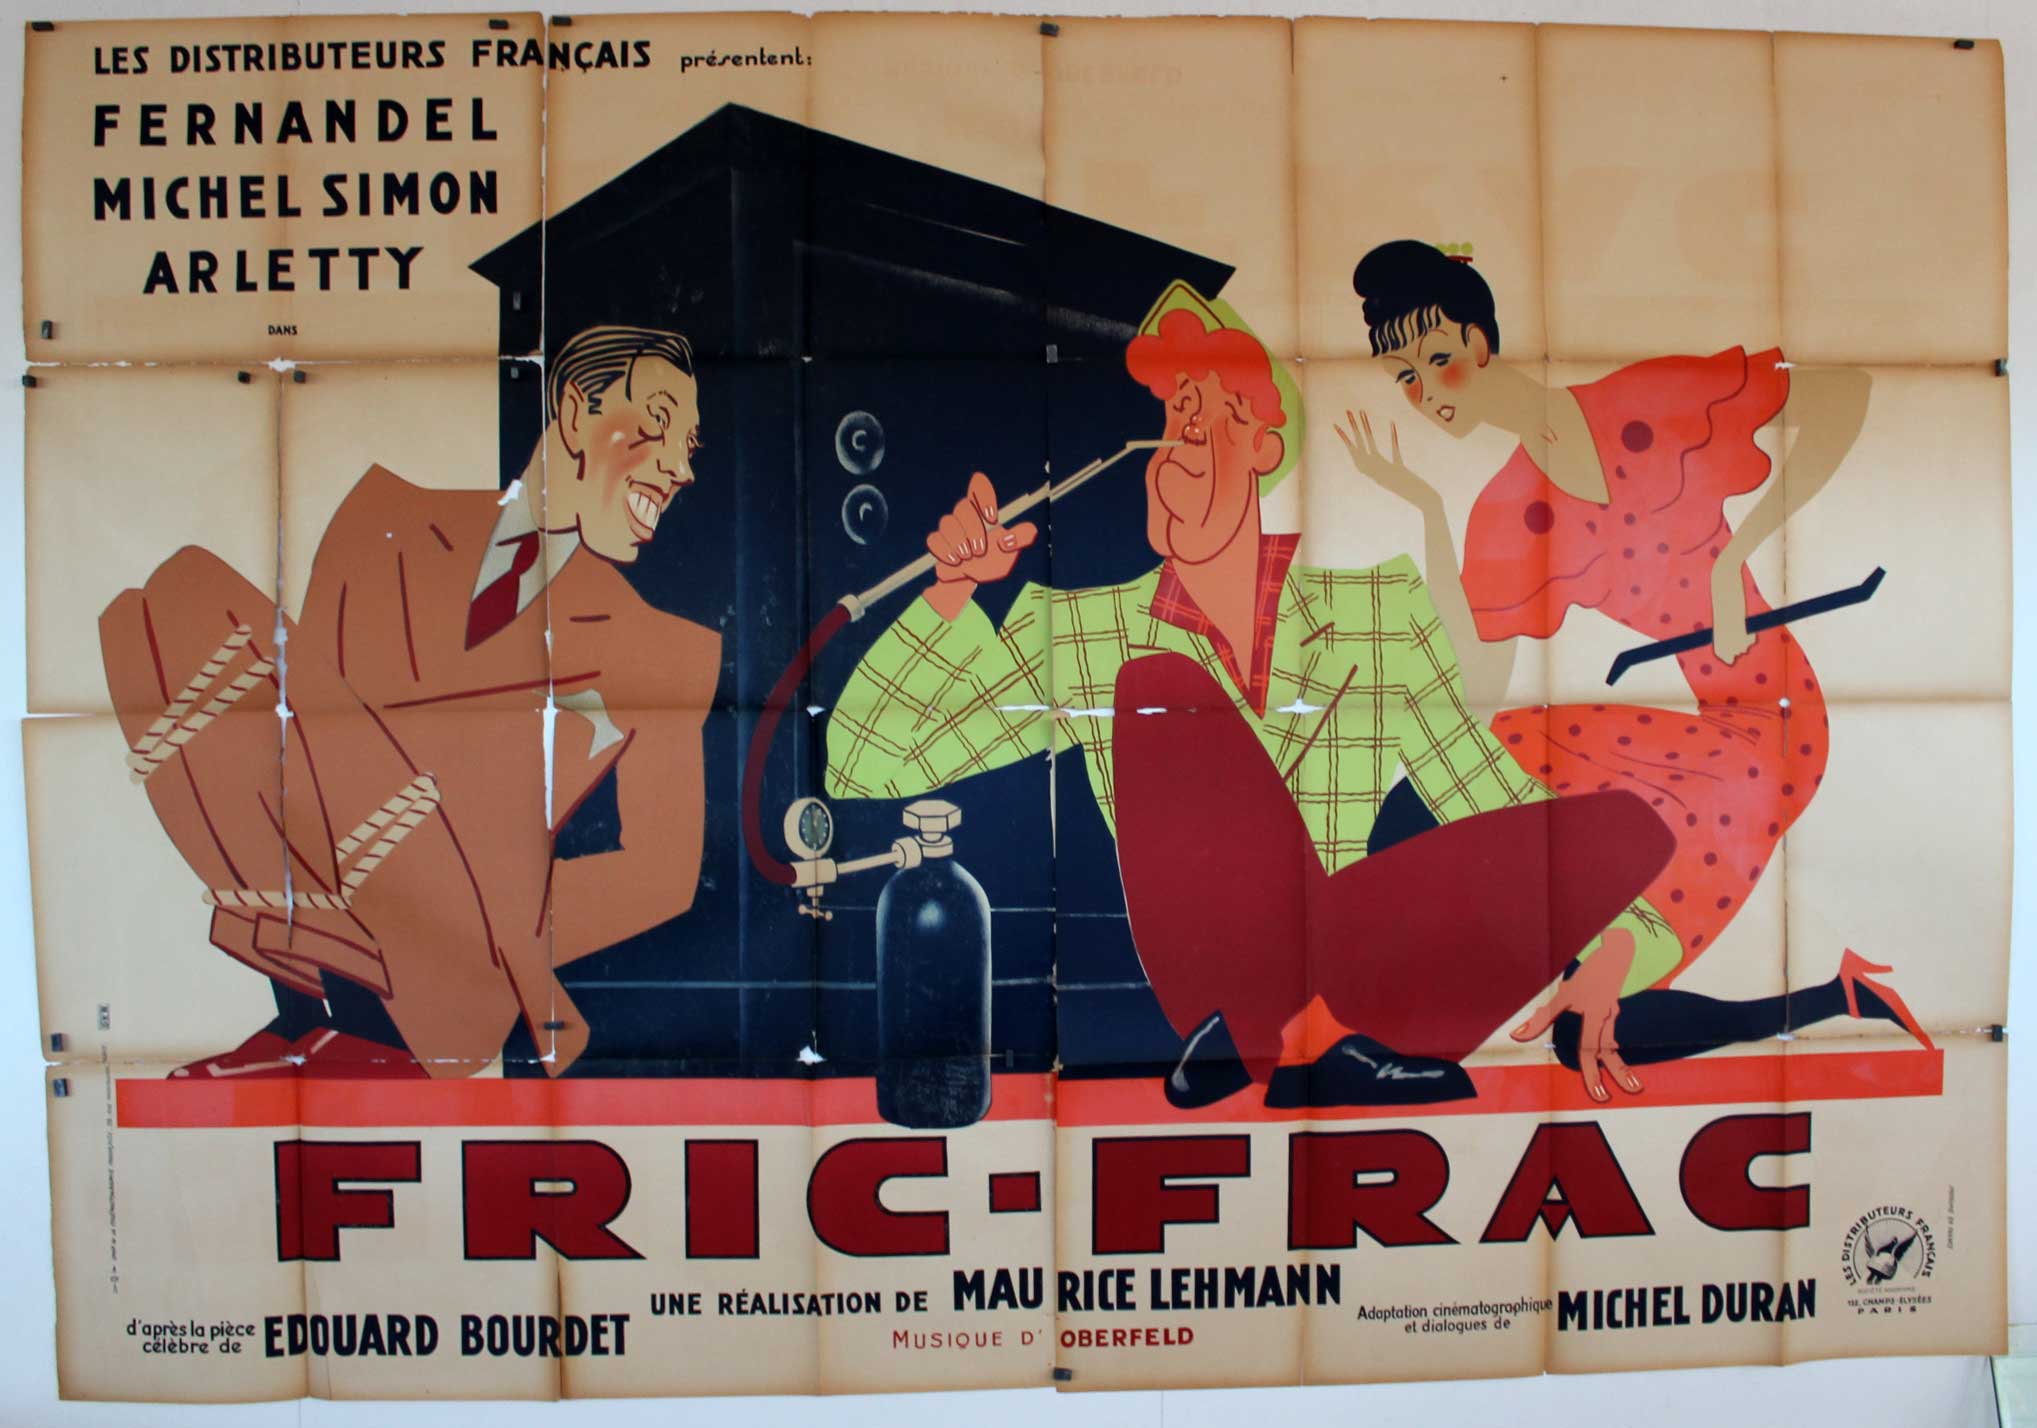 FRIC - FRAC